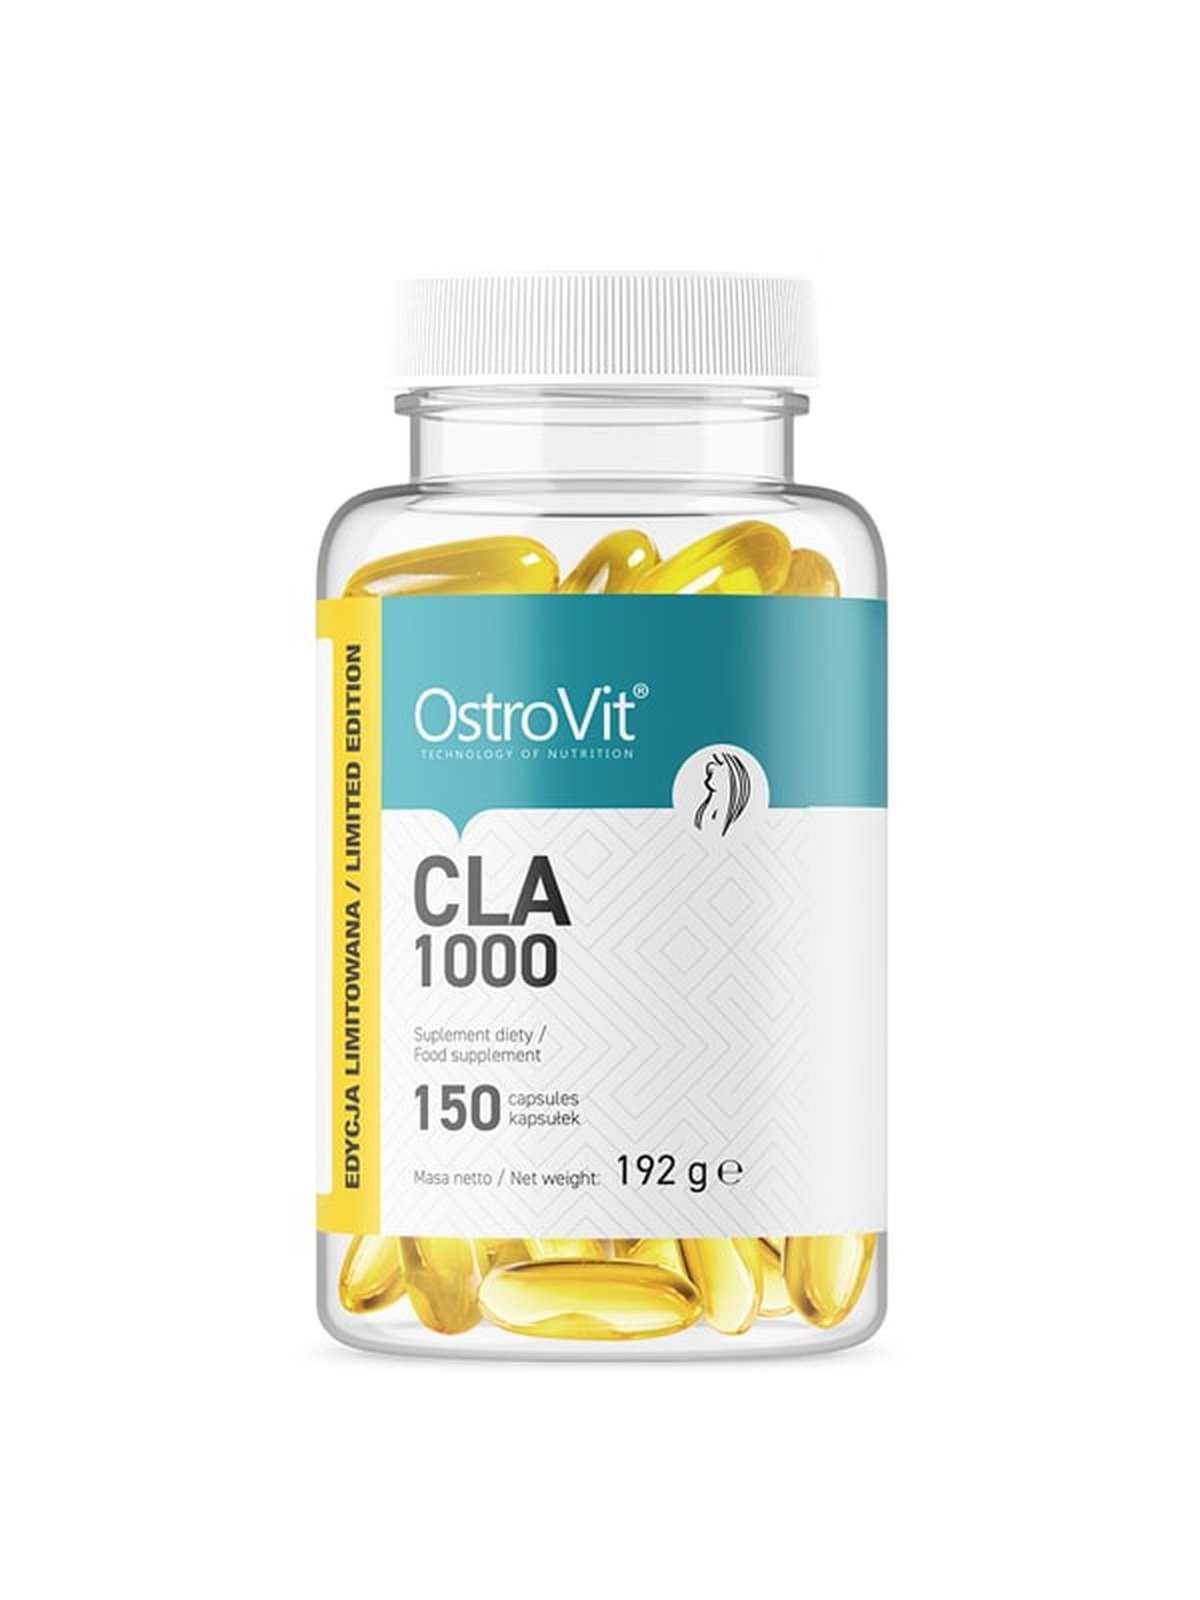 OSTROVIT КЛА 1000 mg (CLA)